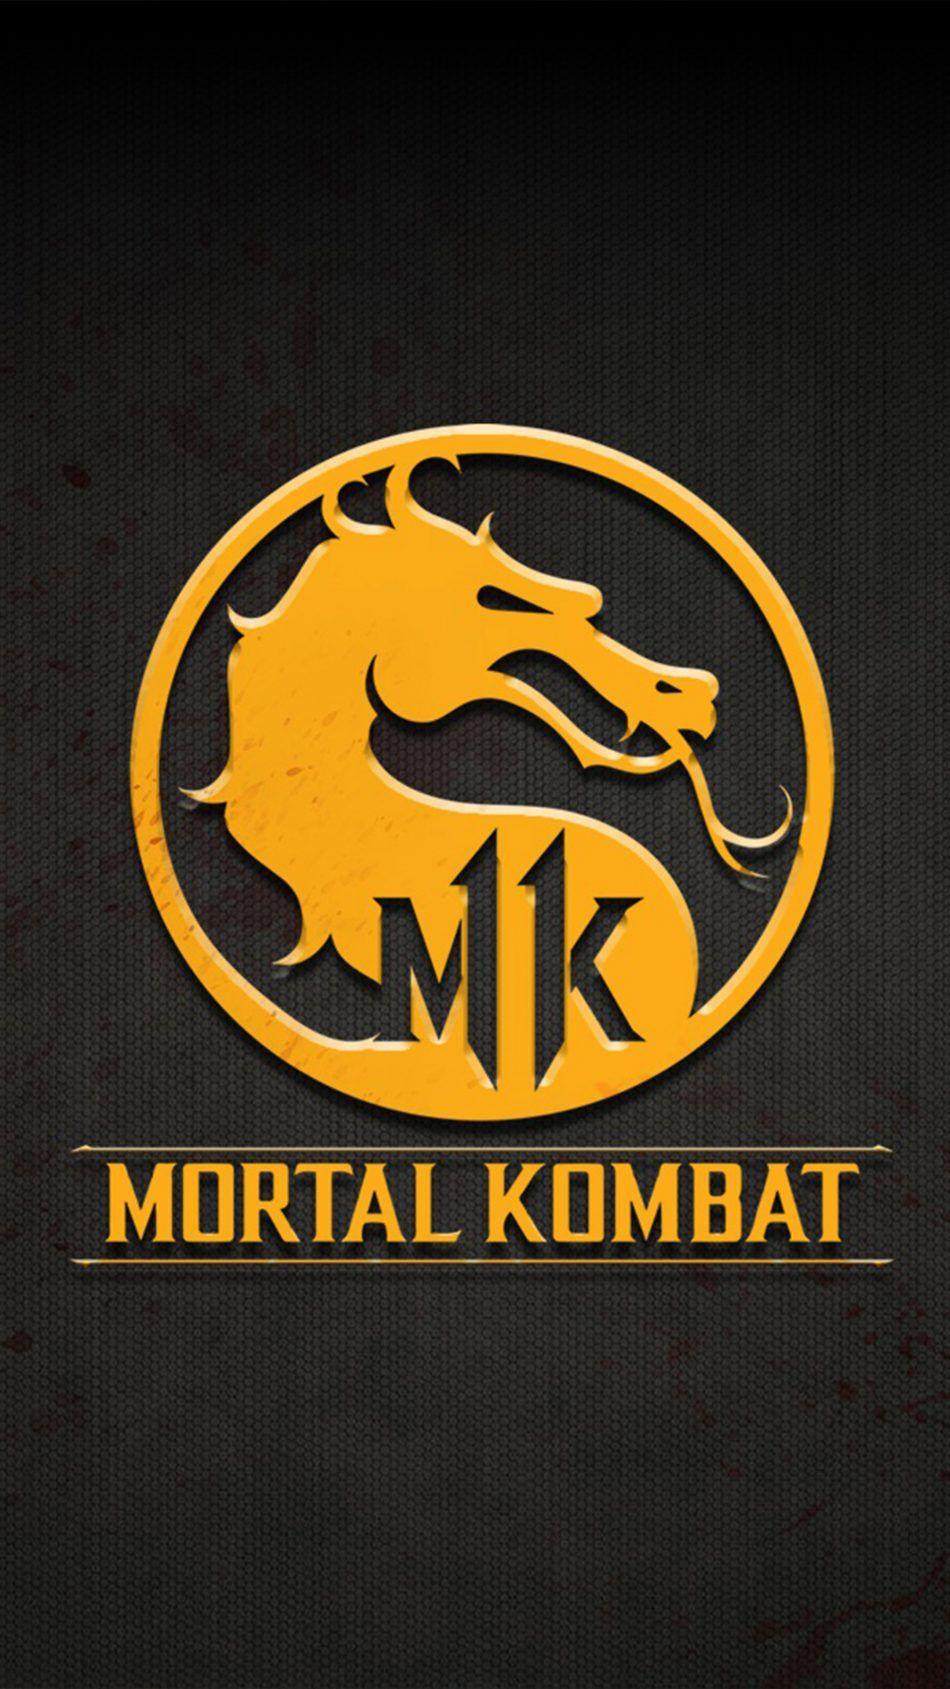 Download Mortal Kombat 11 Logo Free Pure 4K Ultra HD Mobile